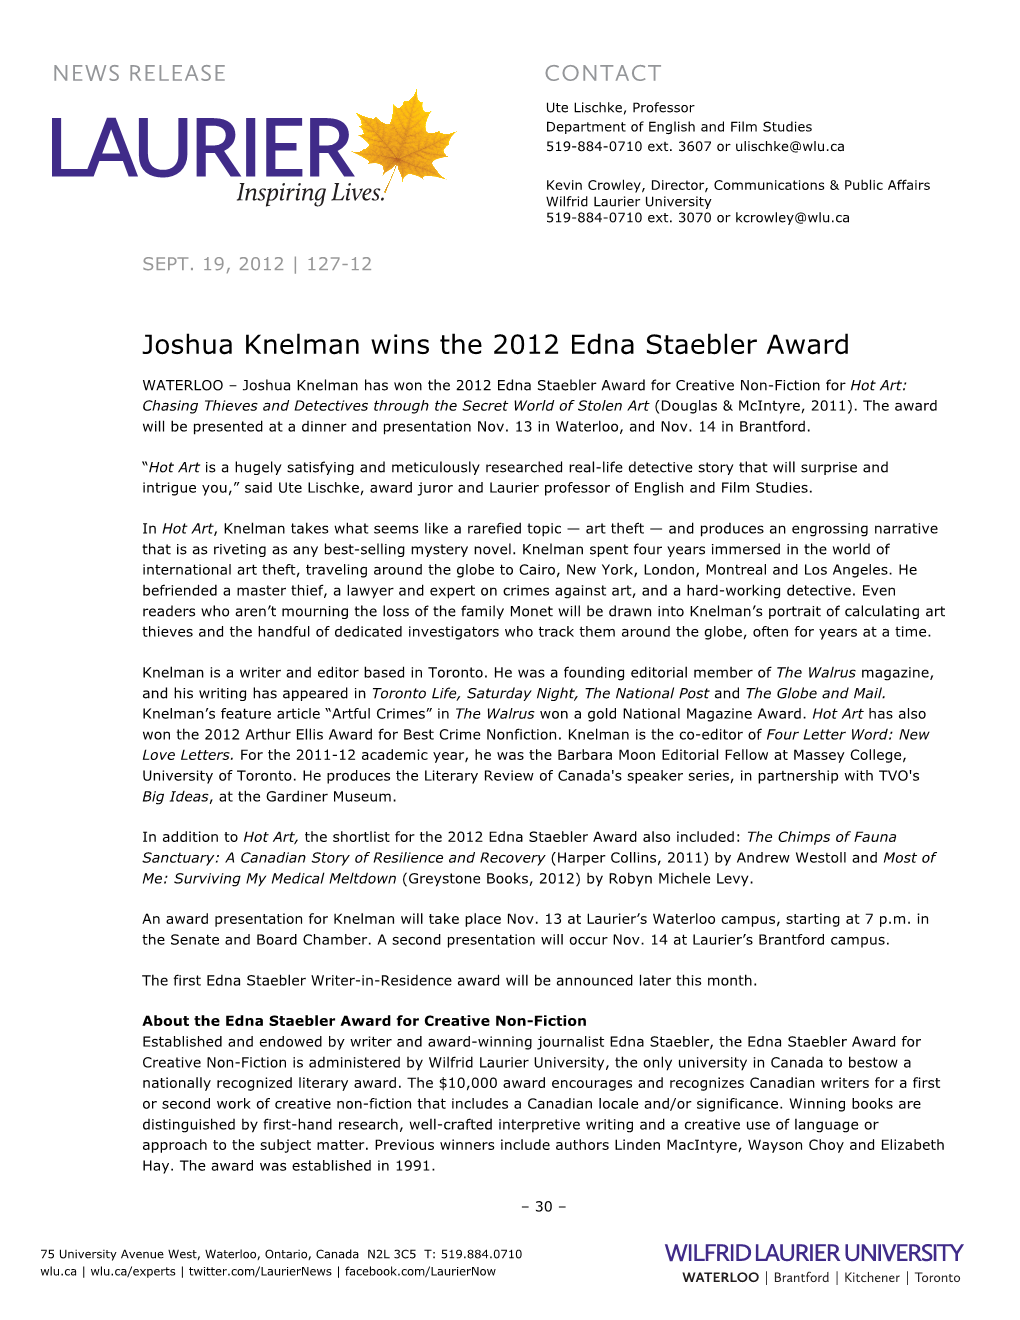 Joshua Knelman Wins the 2012 Edna Staebler Award